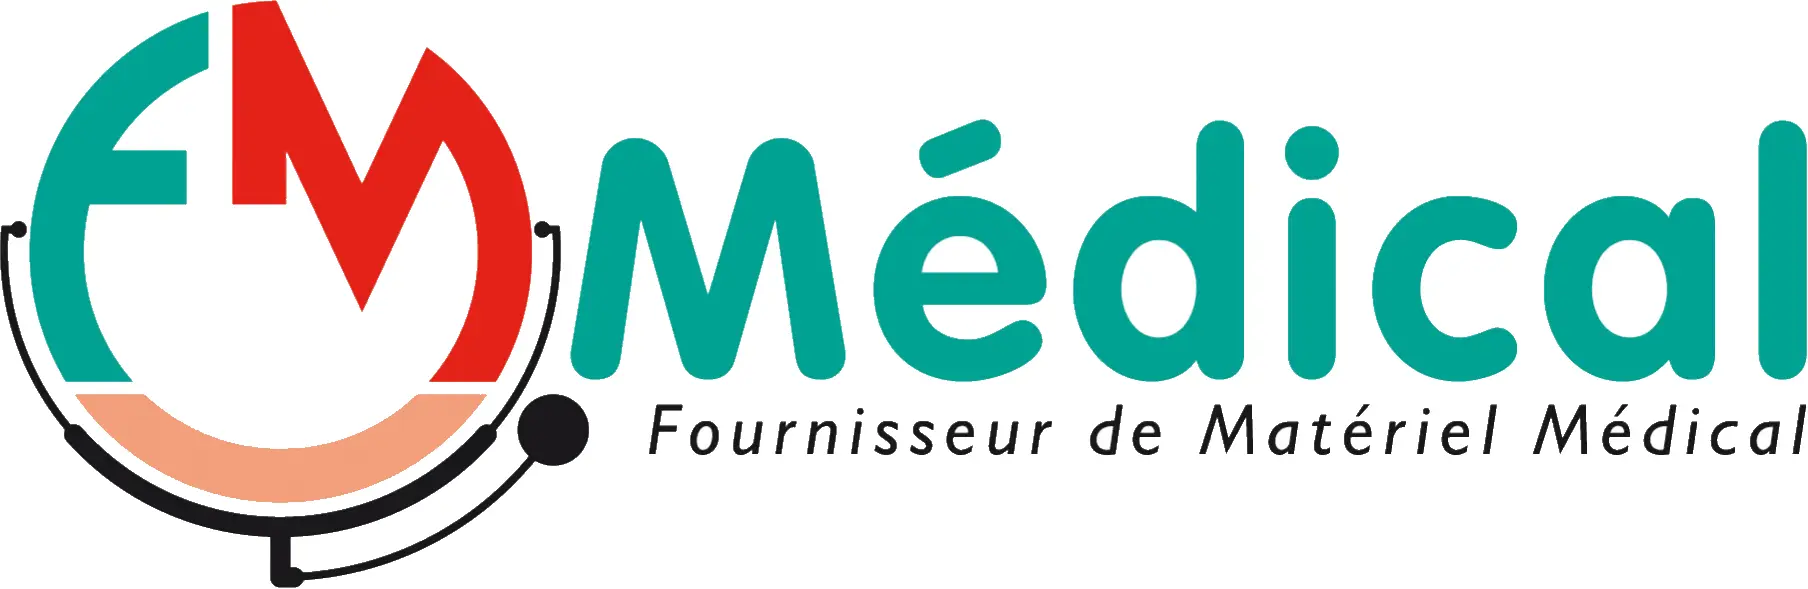 FM Médical icone